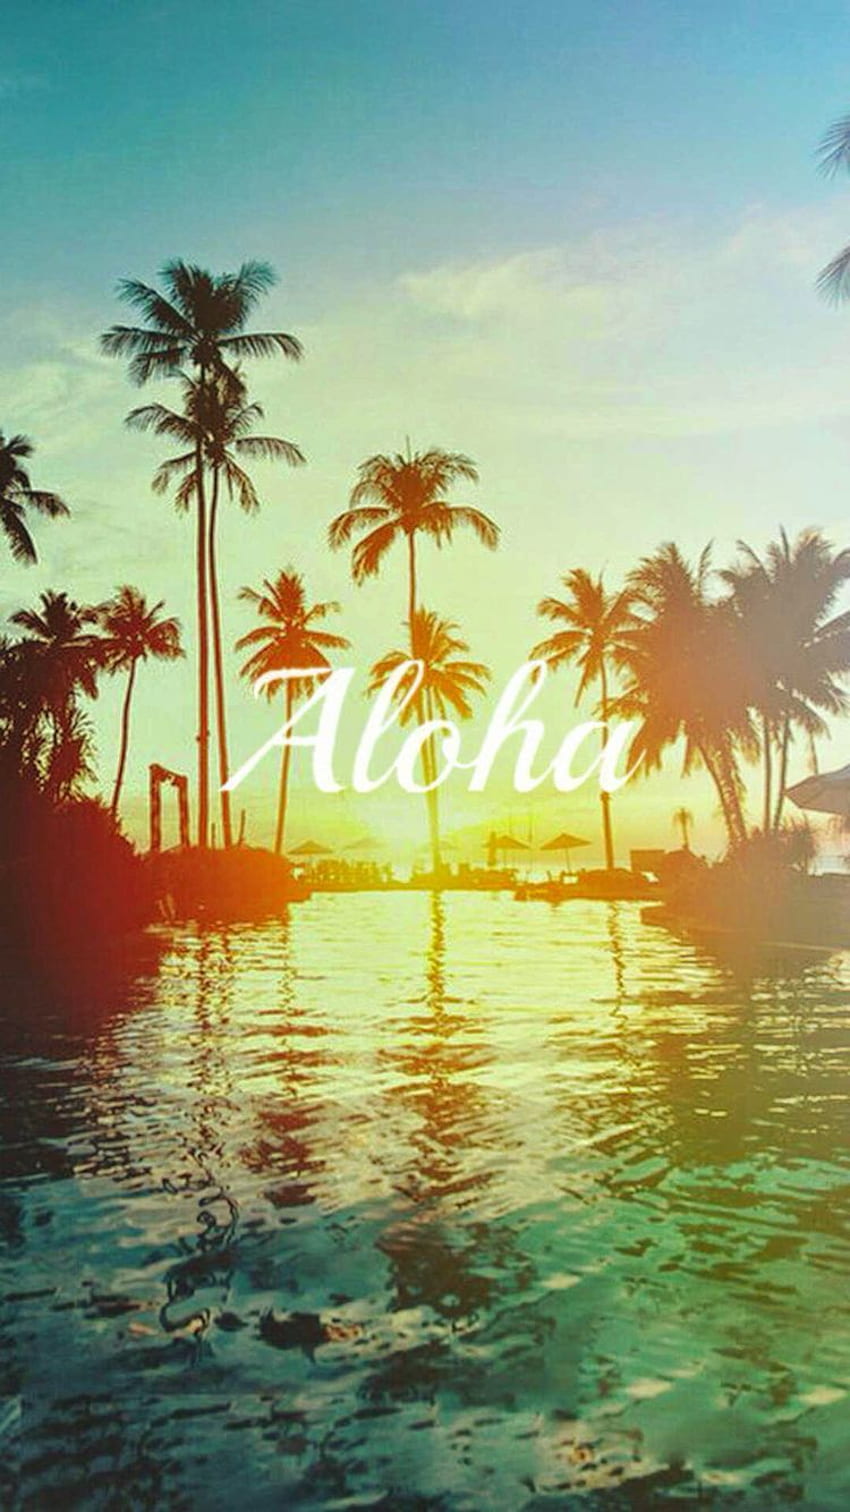 A sunset scene with palm trees and the word aloha - Hawaii